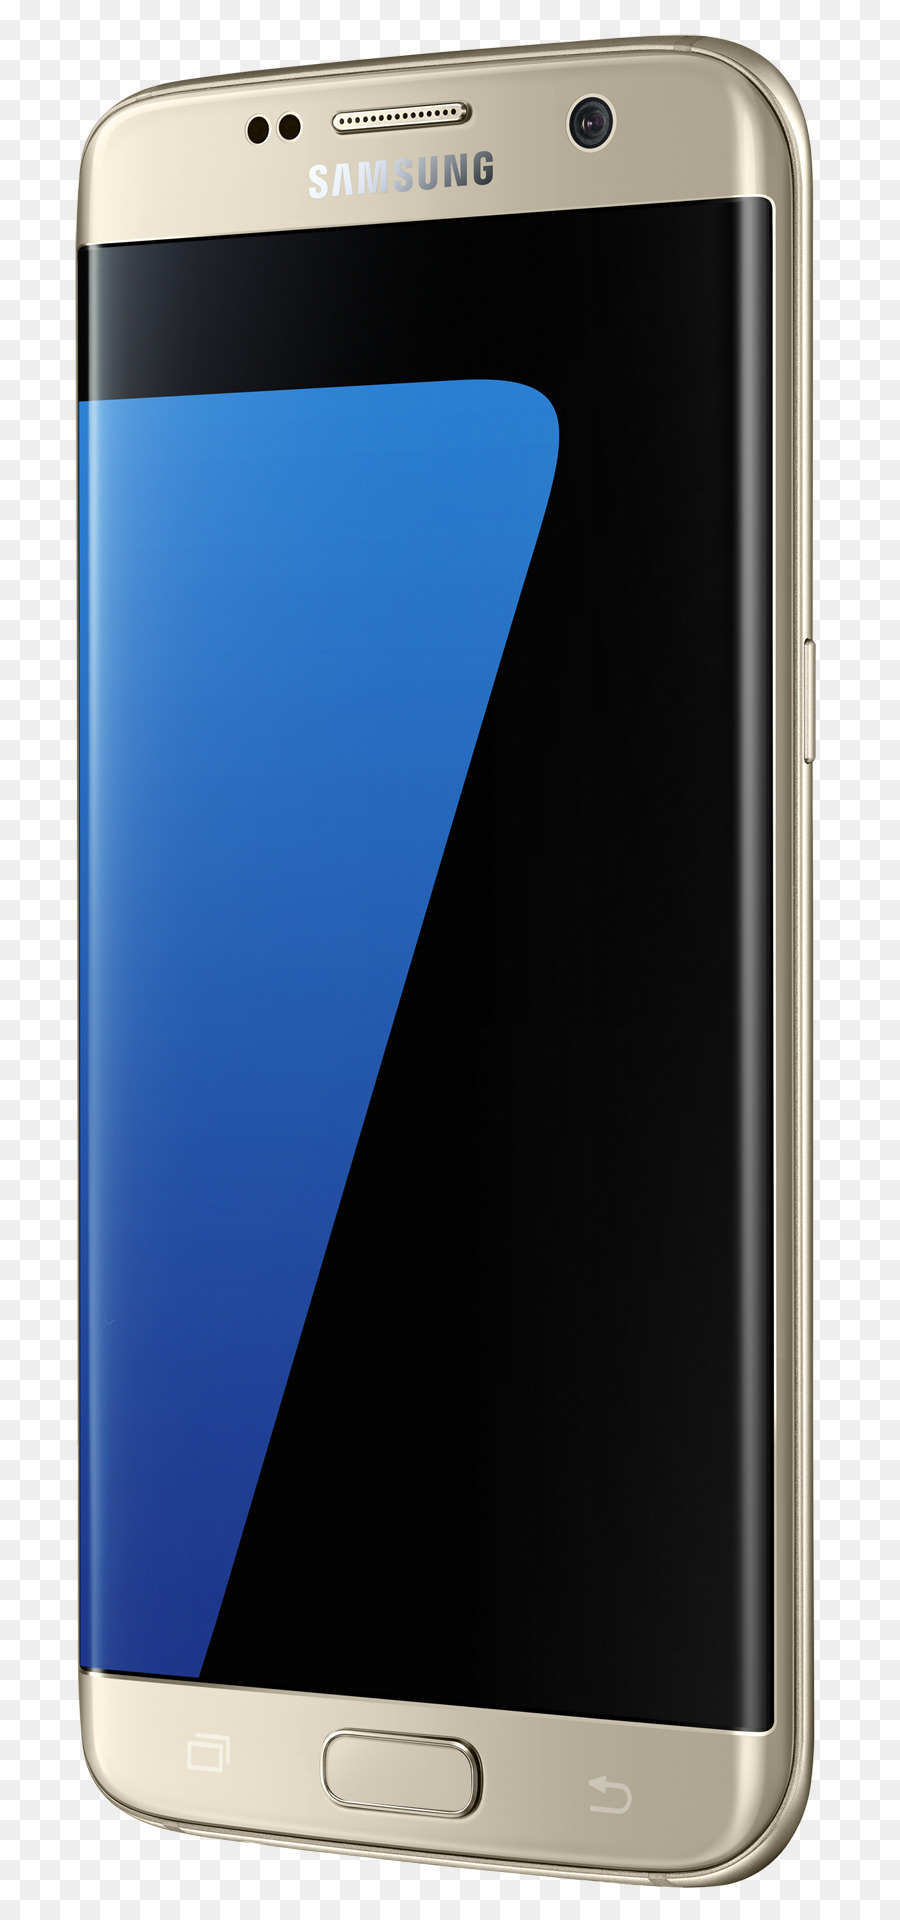 Samsung GALAXY S7 Edge Smartphone 4G - mobile shop